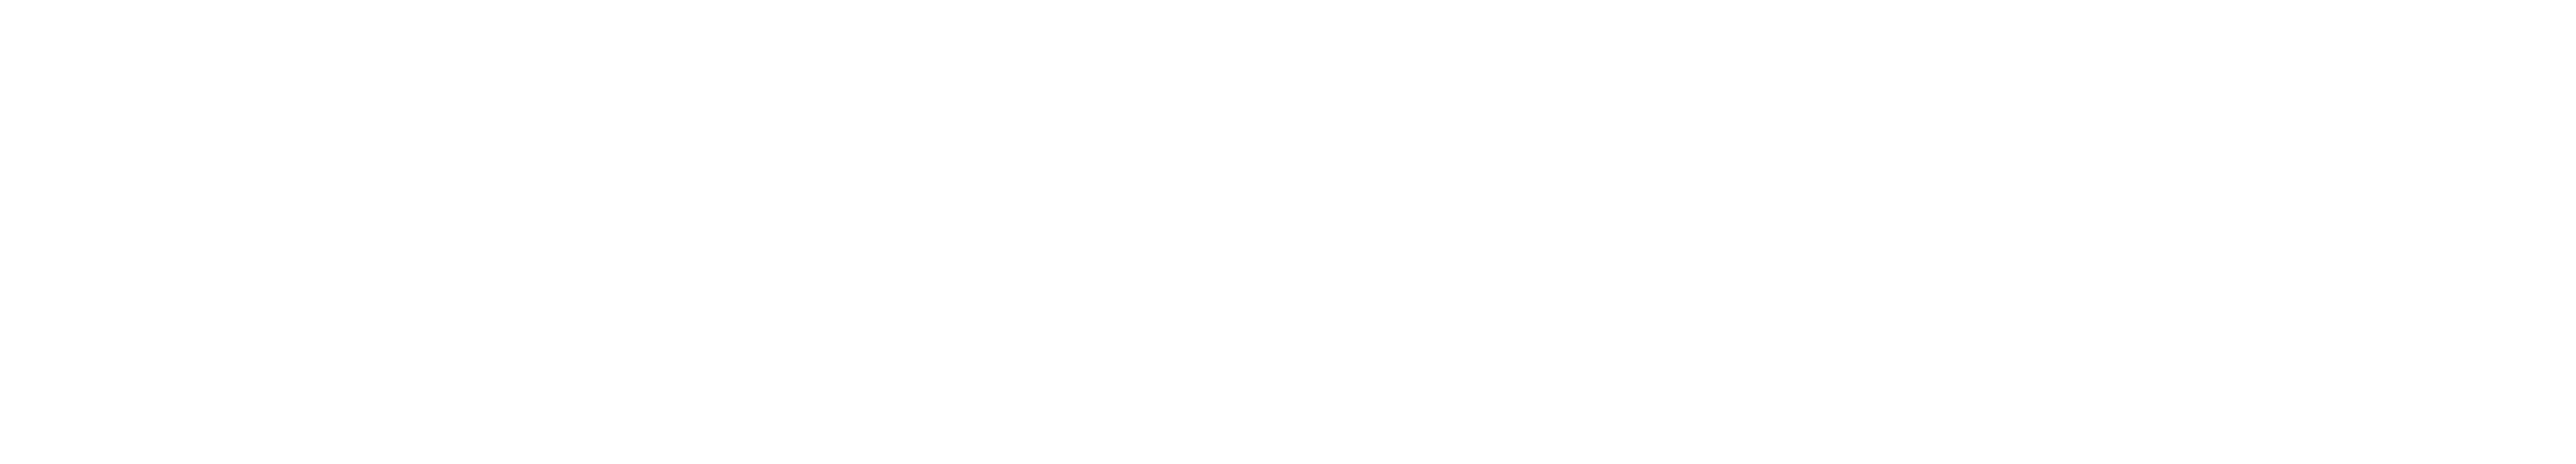 North Shropshire College logo